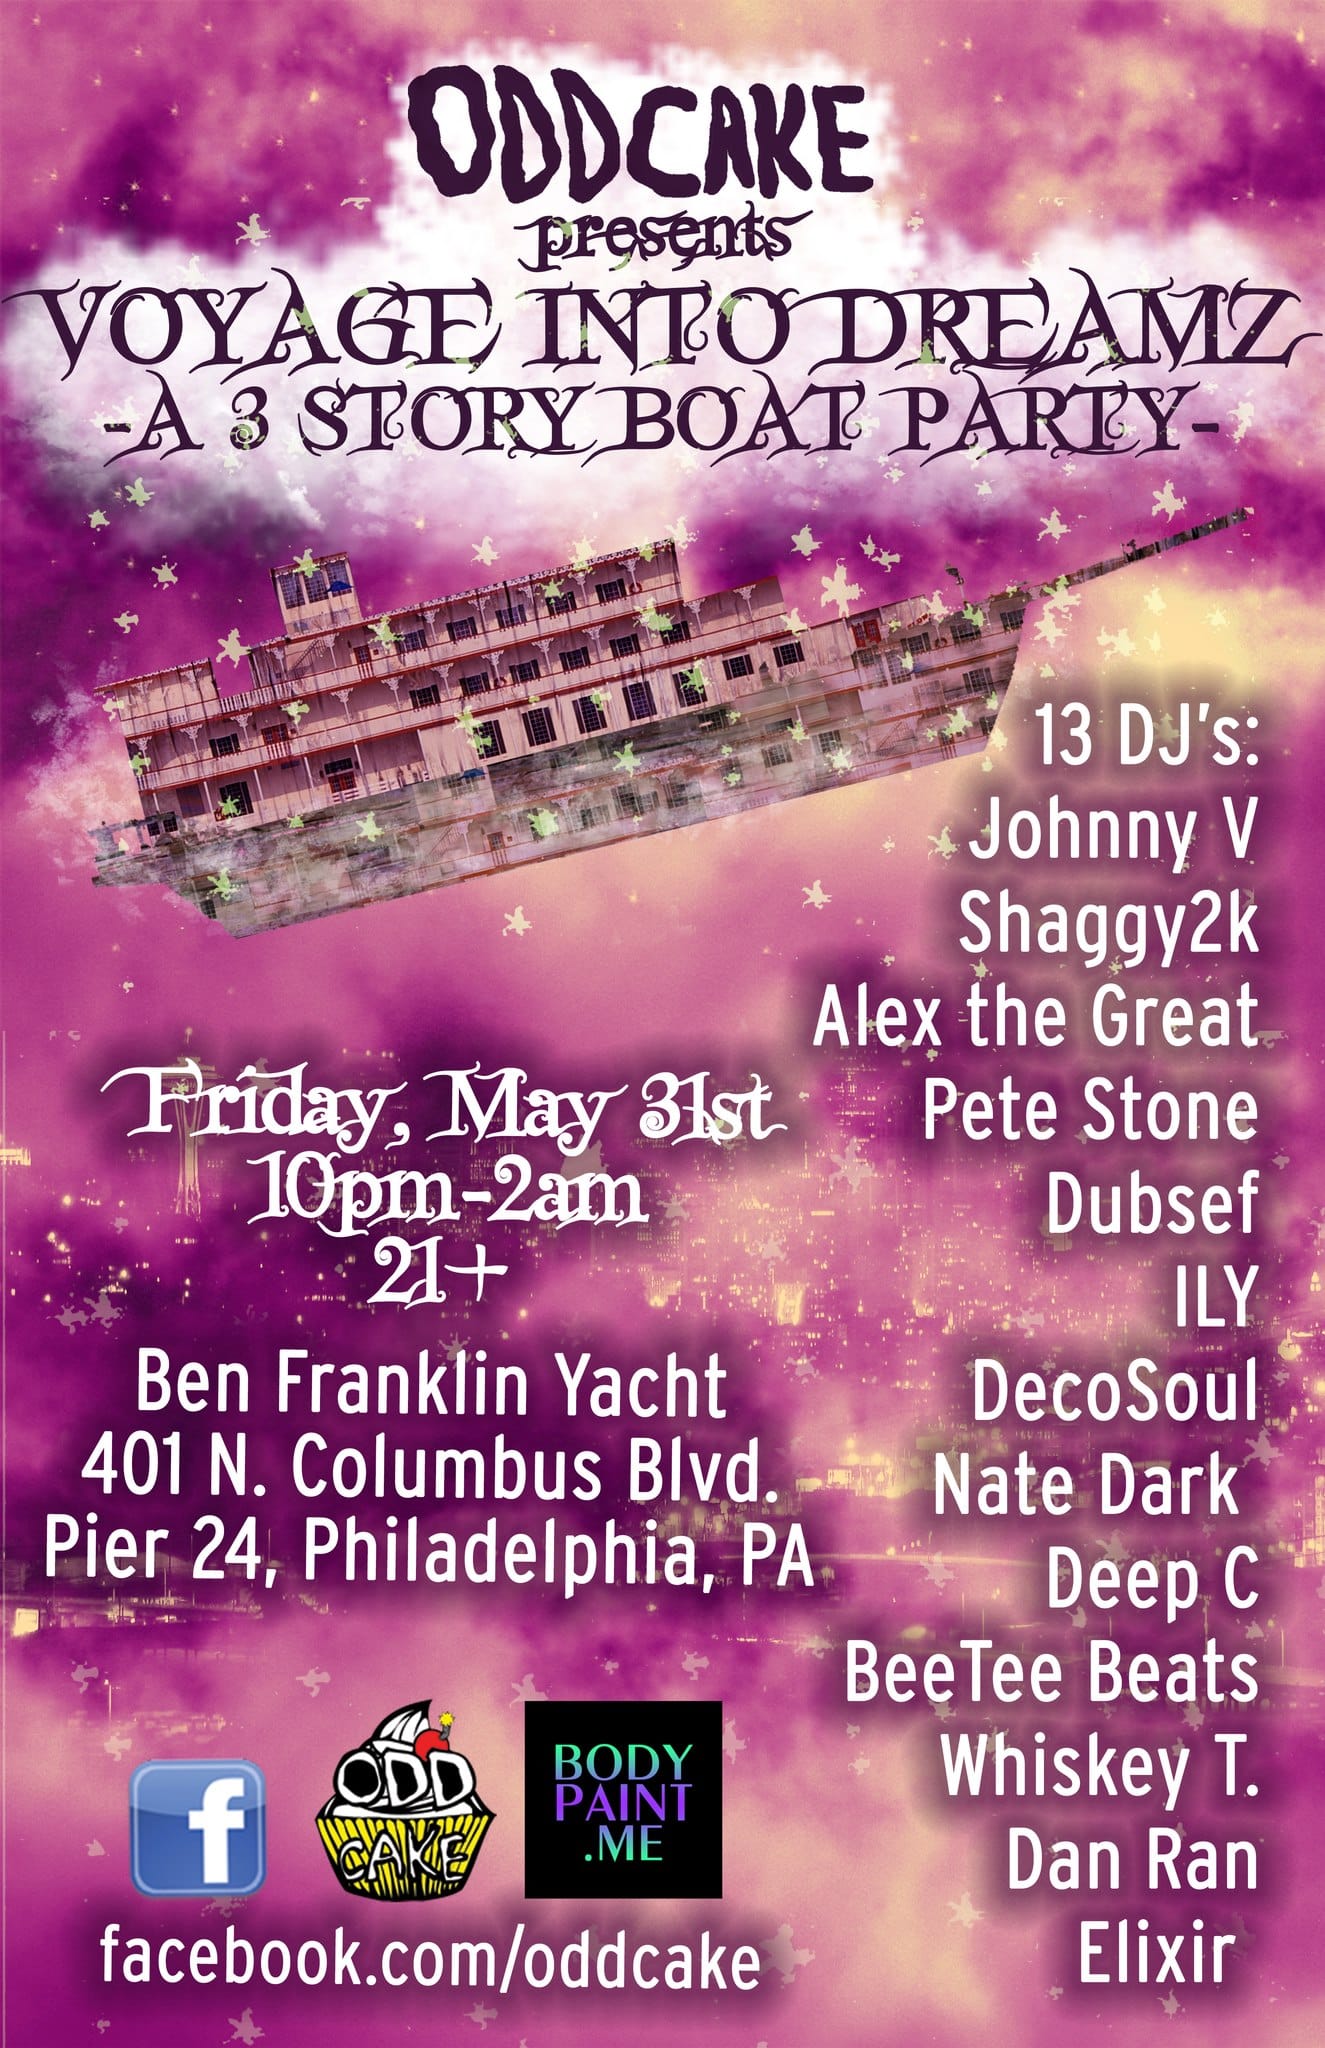 Oddcake Presents Voyange Into Dreamz Fb Flyer At Ben Franklin Yacht Philadelphia, OddCake